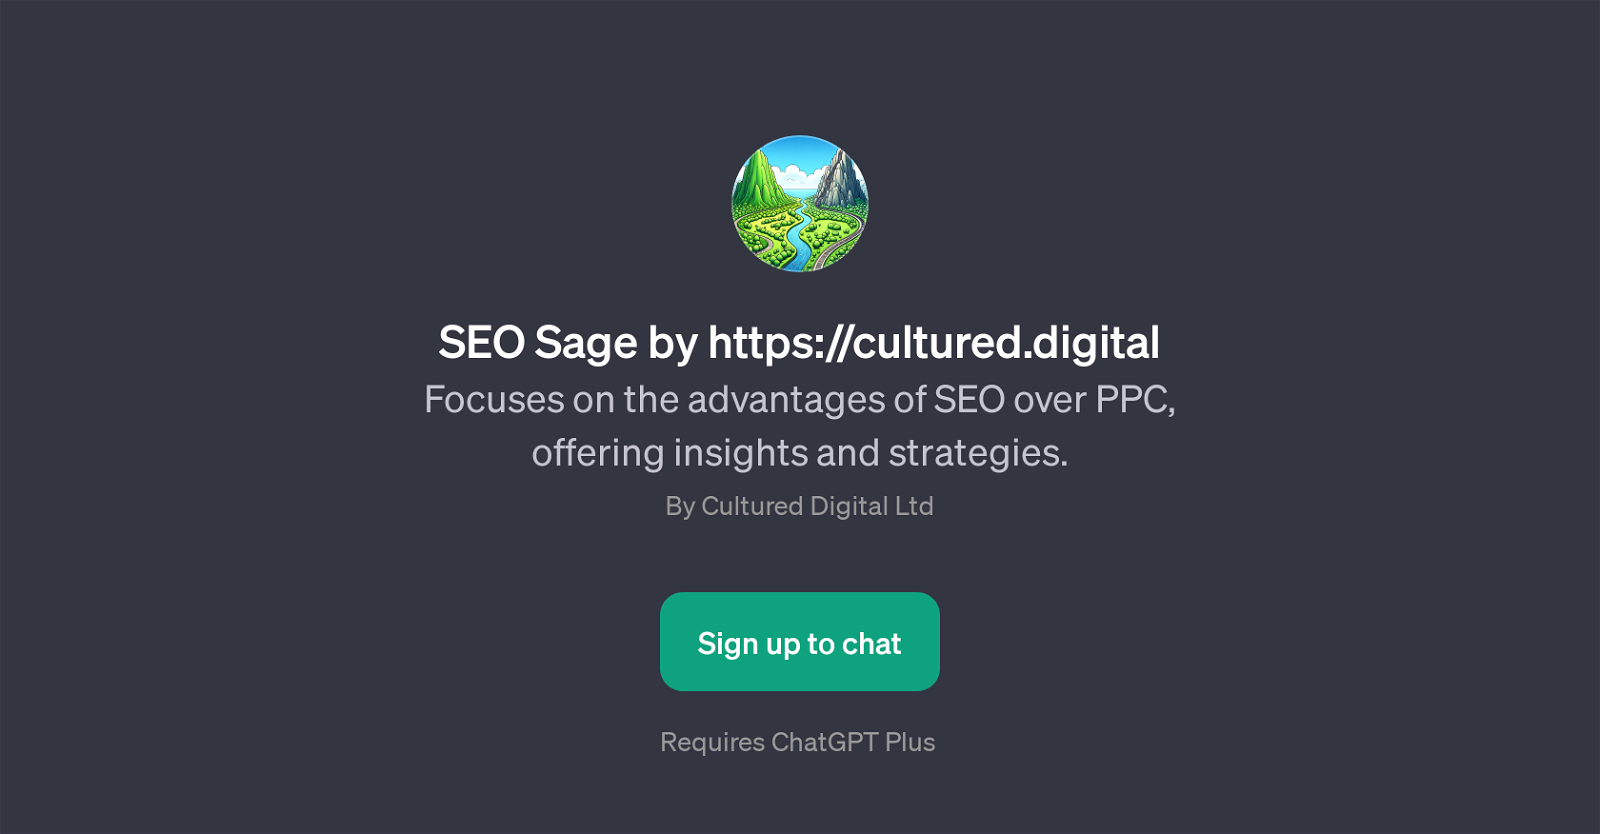 SEO Sage by Cultured Digital website